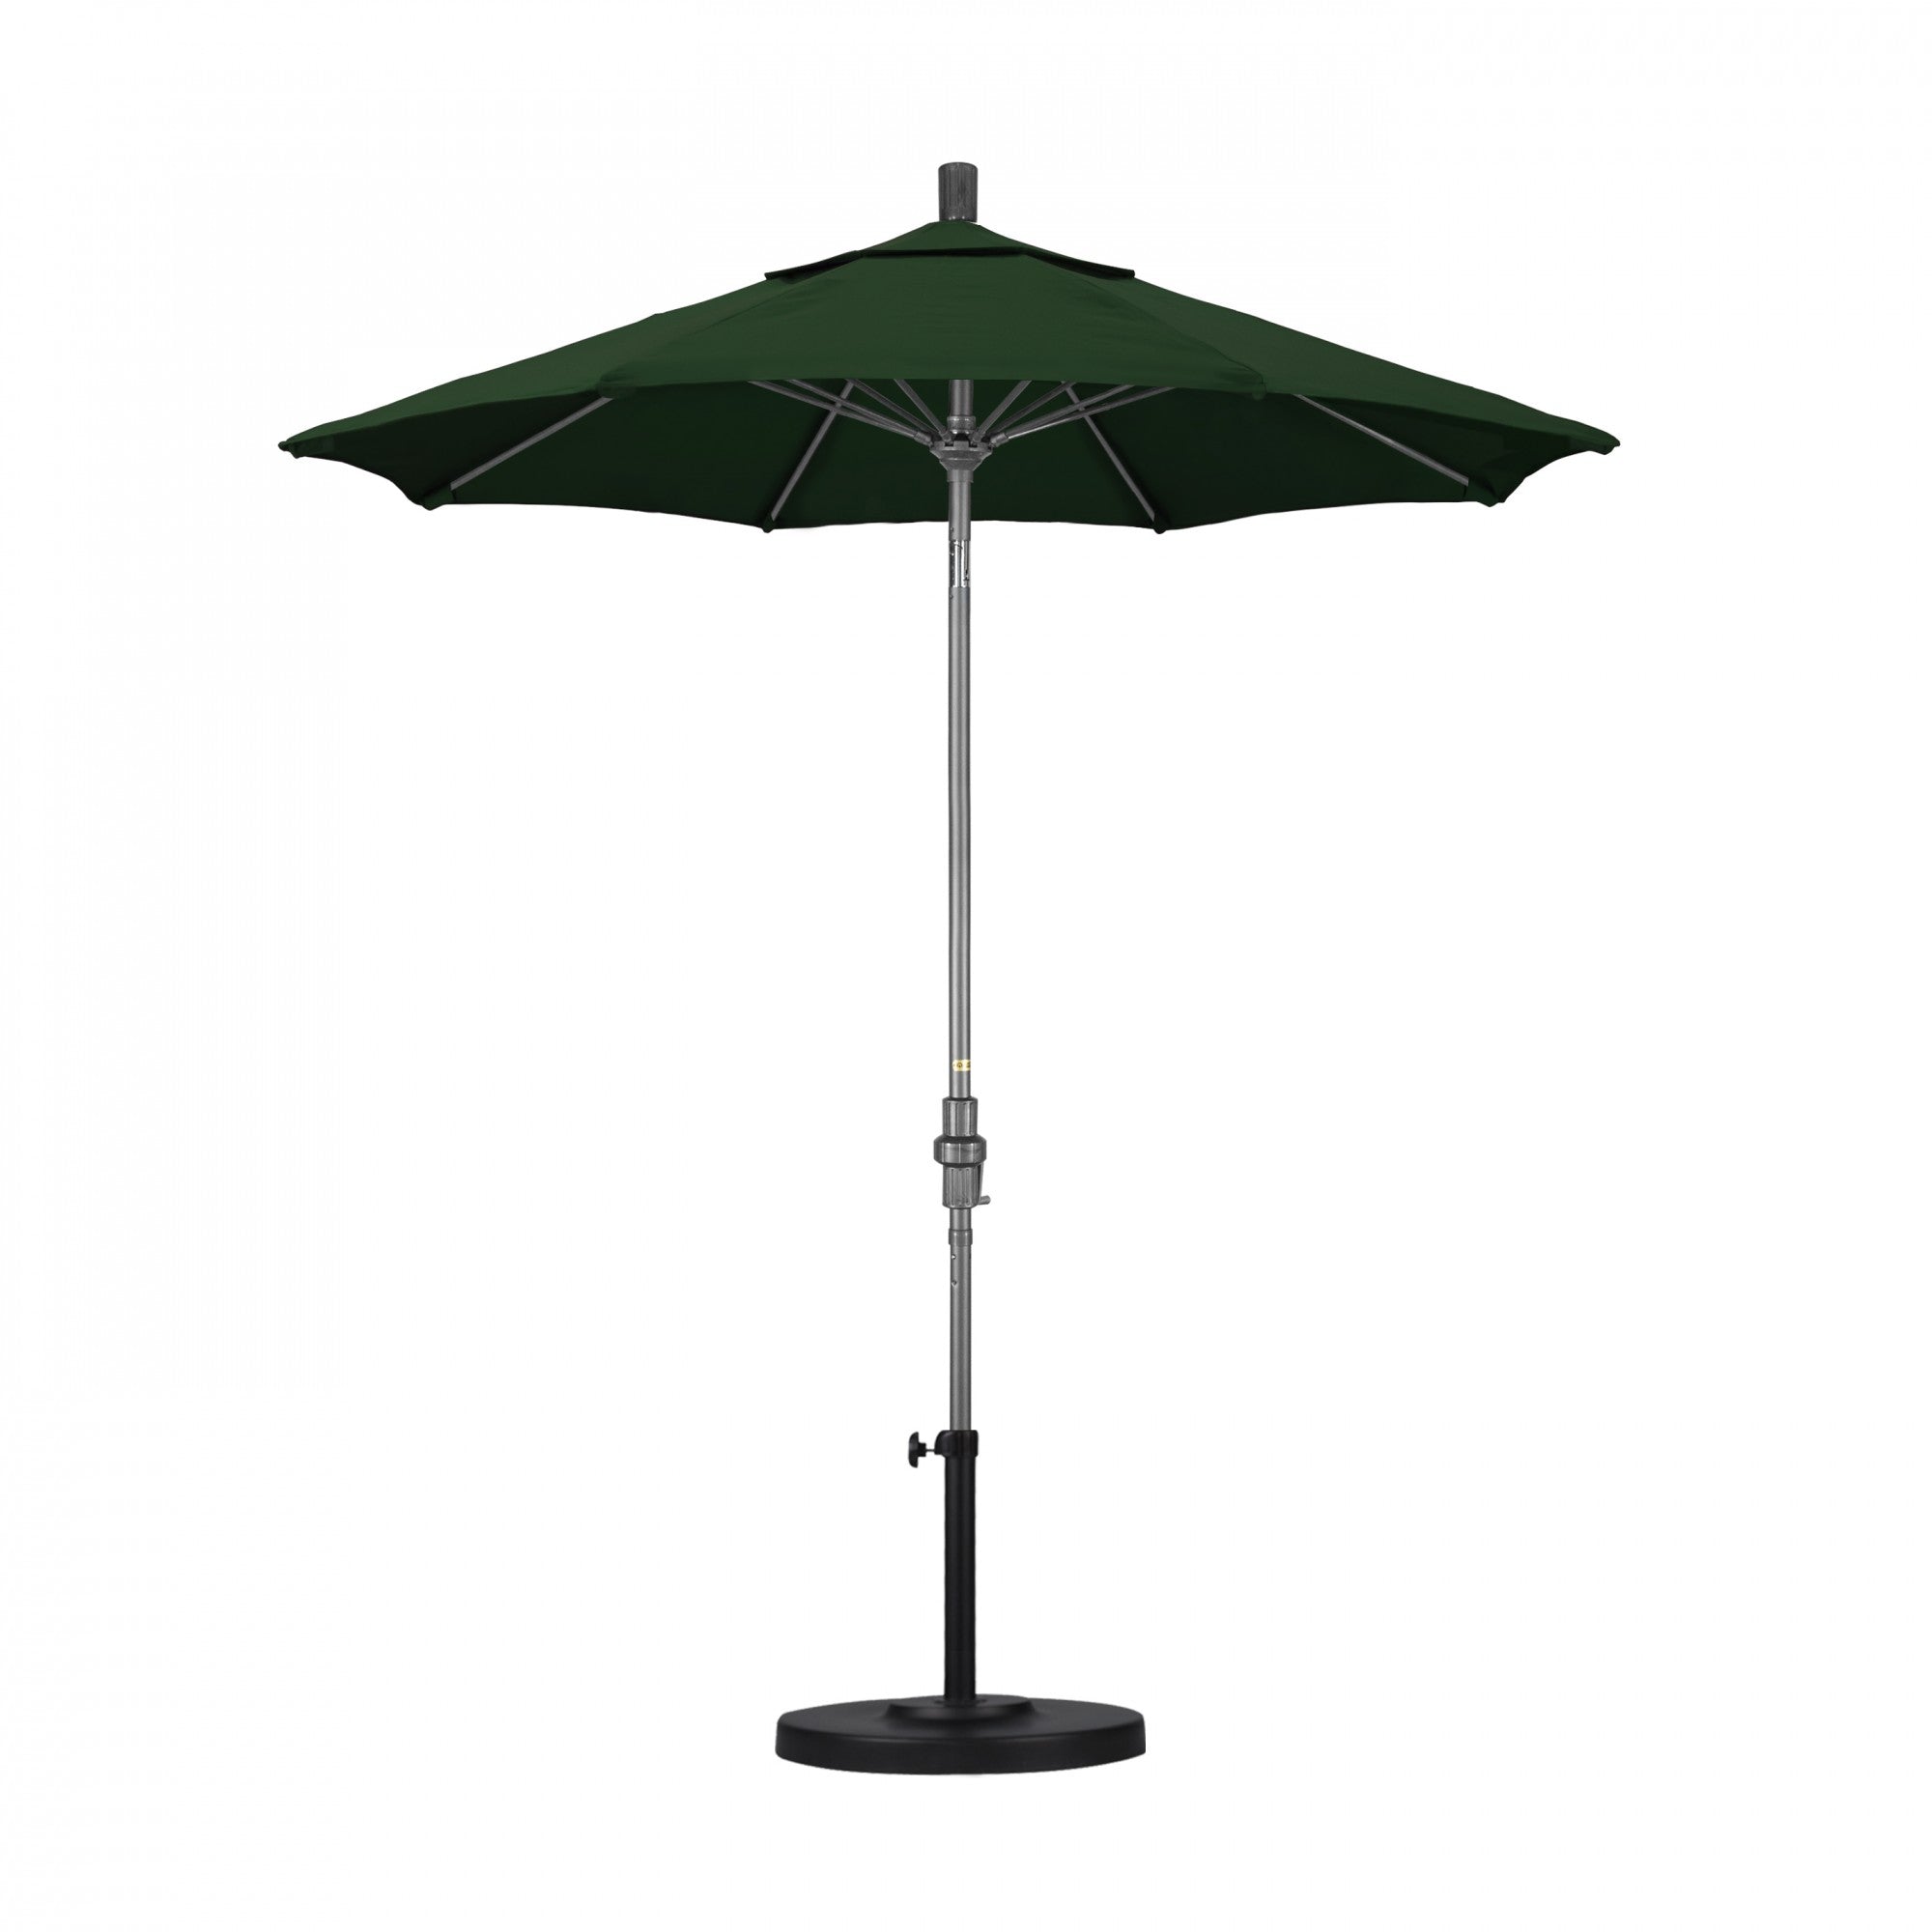 California Umbrella - 7.5' - Patio Umbrella Umbrella - Aluminum Pole - Hunter Green - Pacifica - GSCUF758010-SA46